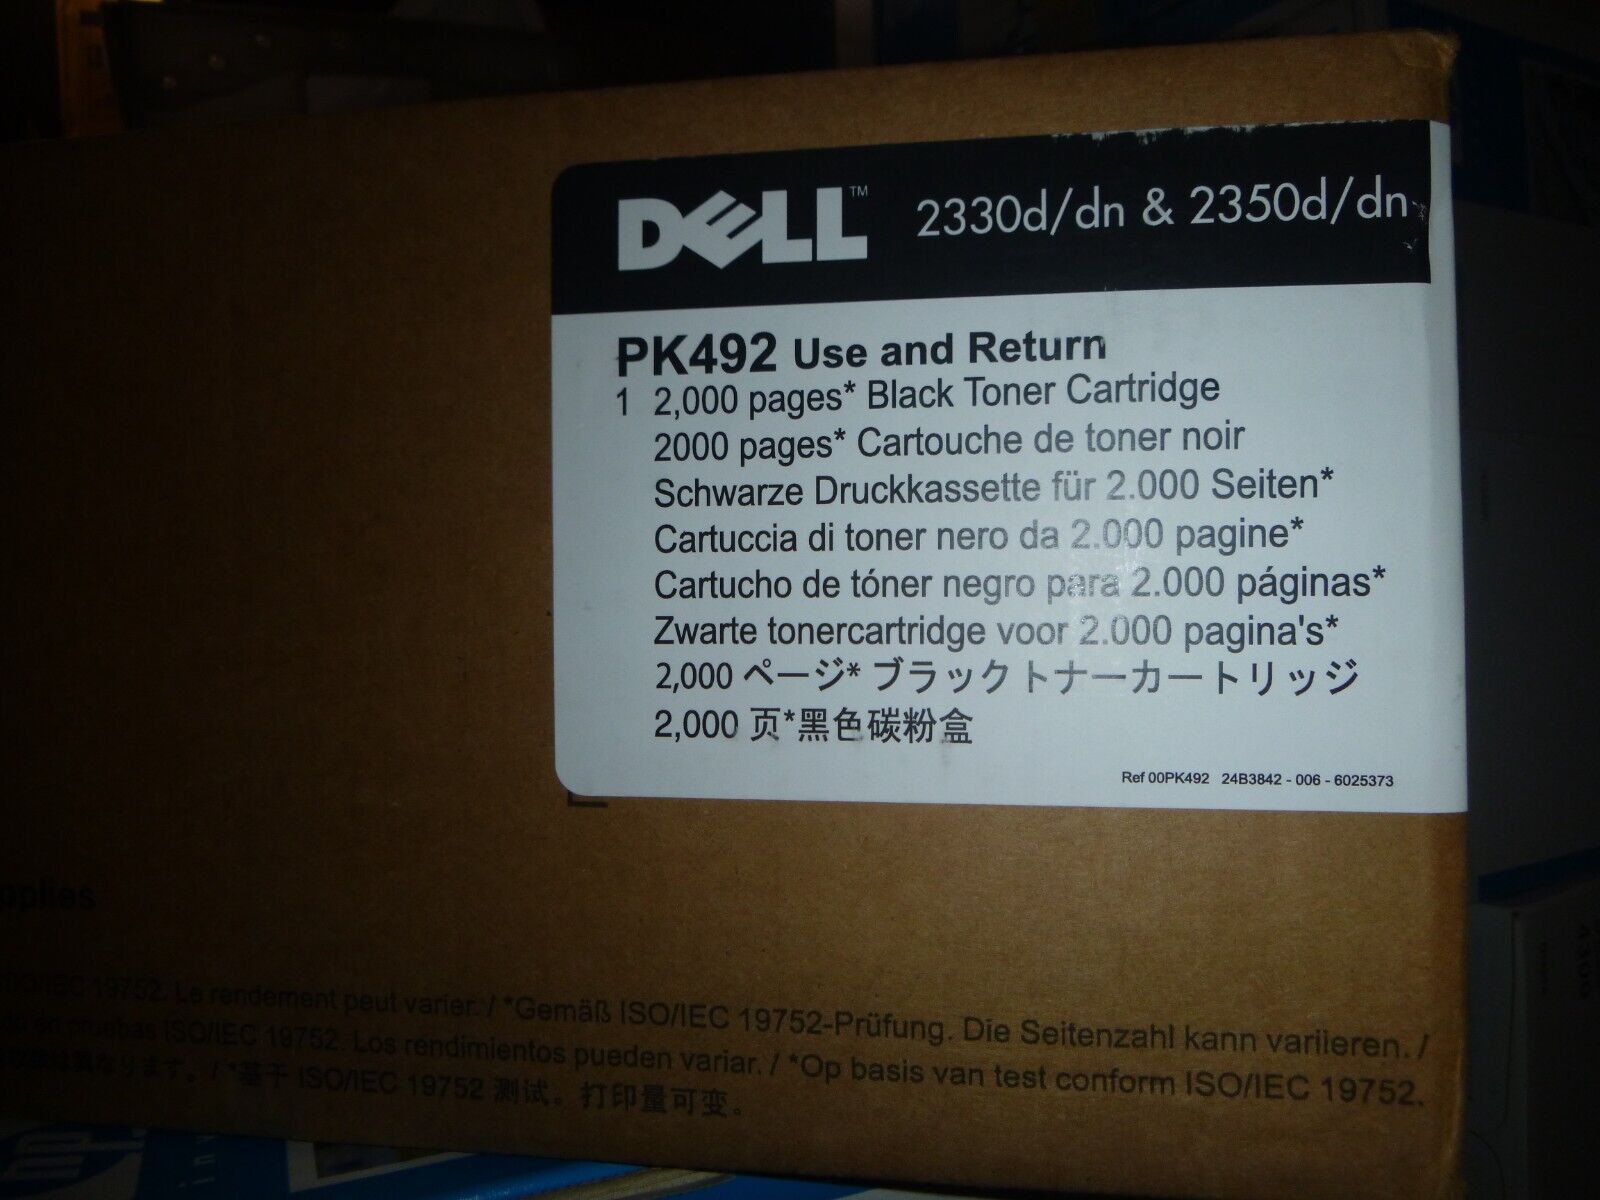 New Dell PK492 Black Toner Cartridge For 2330d/dn, 2350d/dn